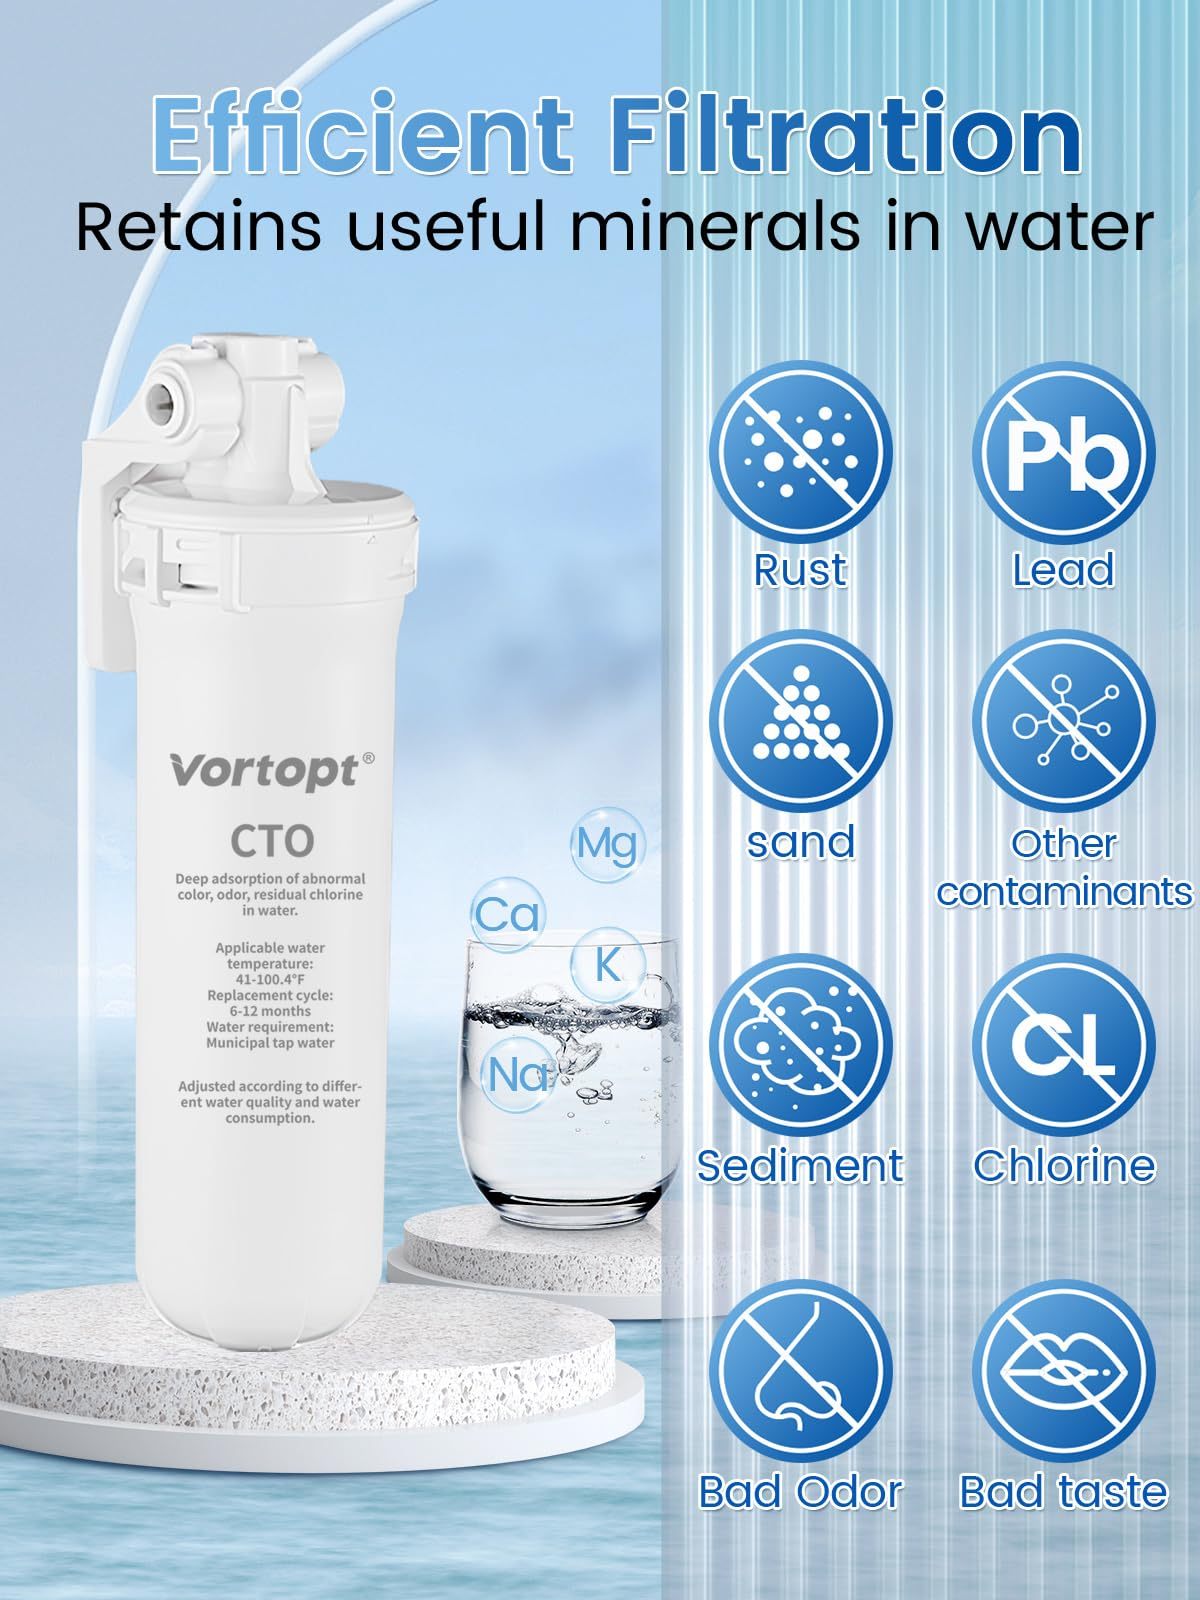 Vortopt Under Sink Water Filter,19000 Gallons Under Sink Water Filtration System,NSF/ANSI 53&42 Certified,Reduces Lead, Chlorine, Bad Taste & Odor,Q9-C1 (2 Filters）